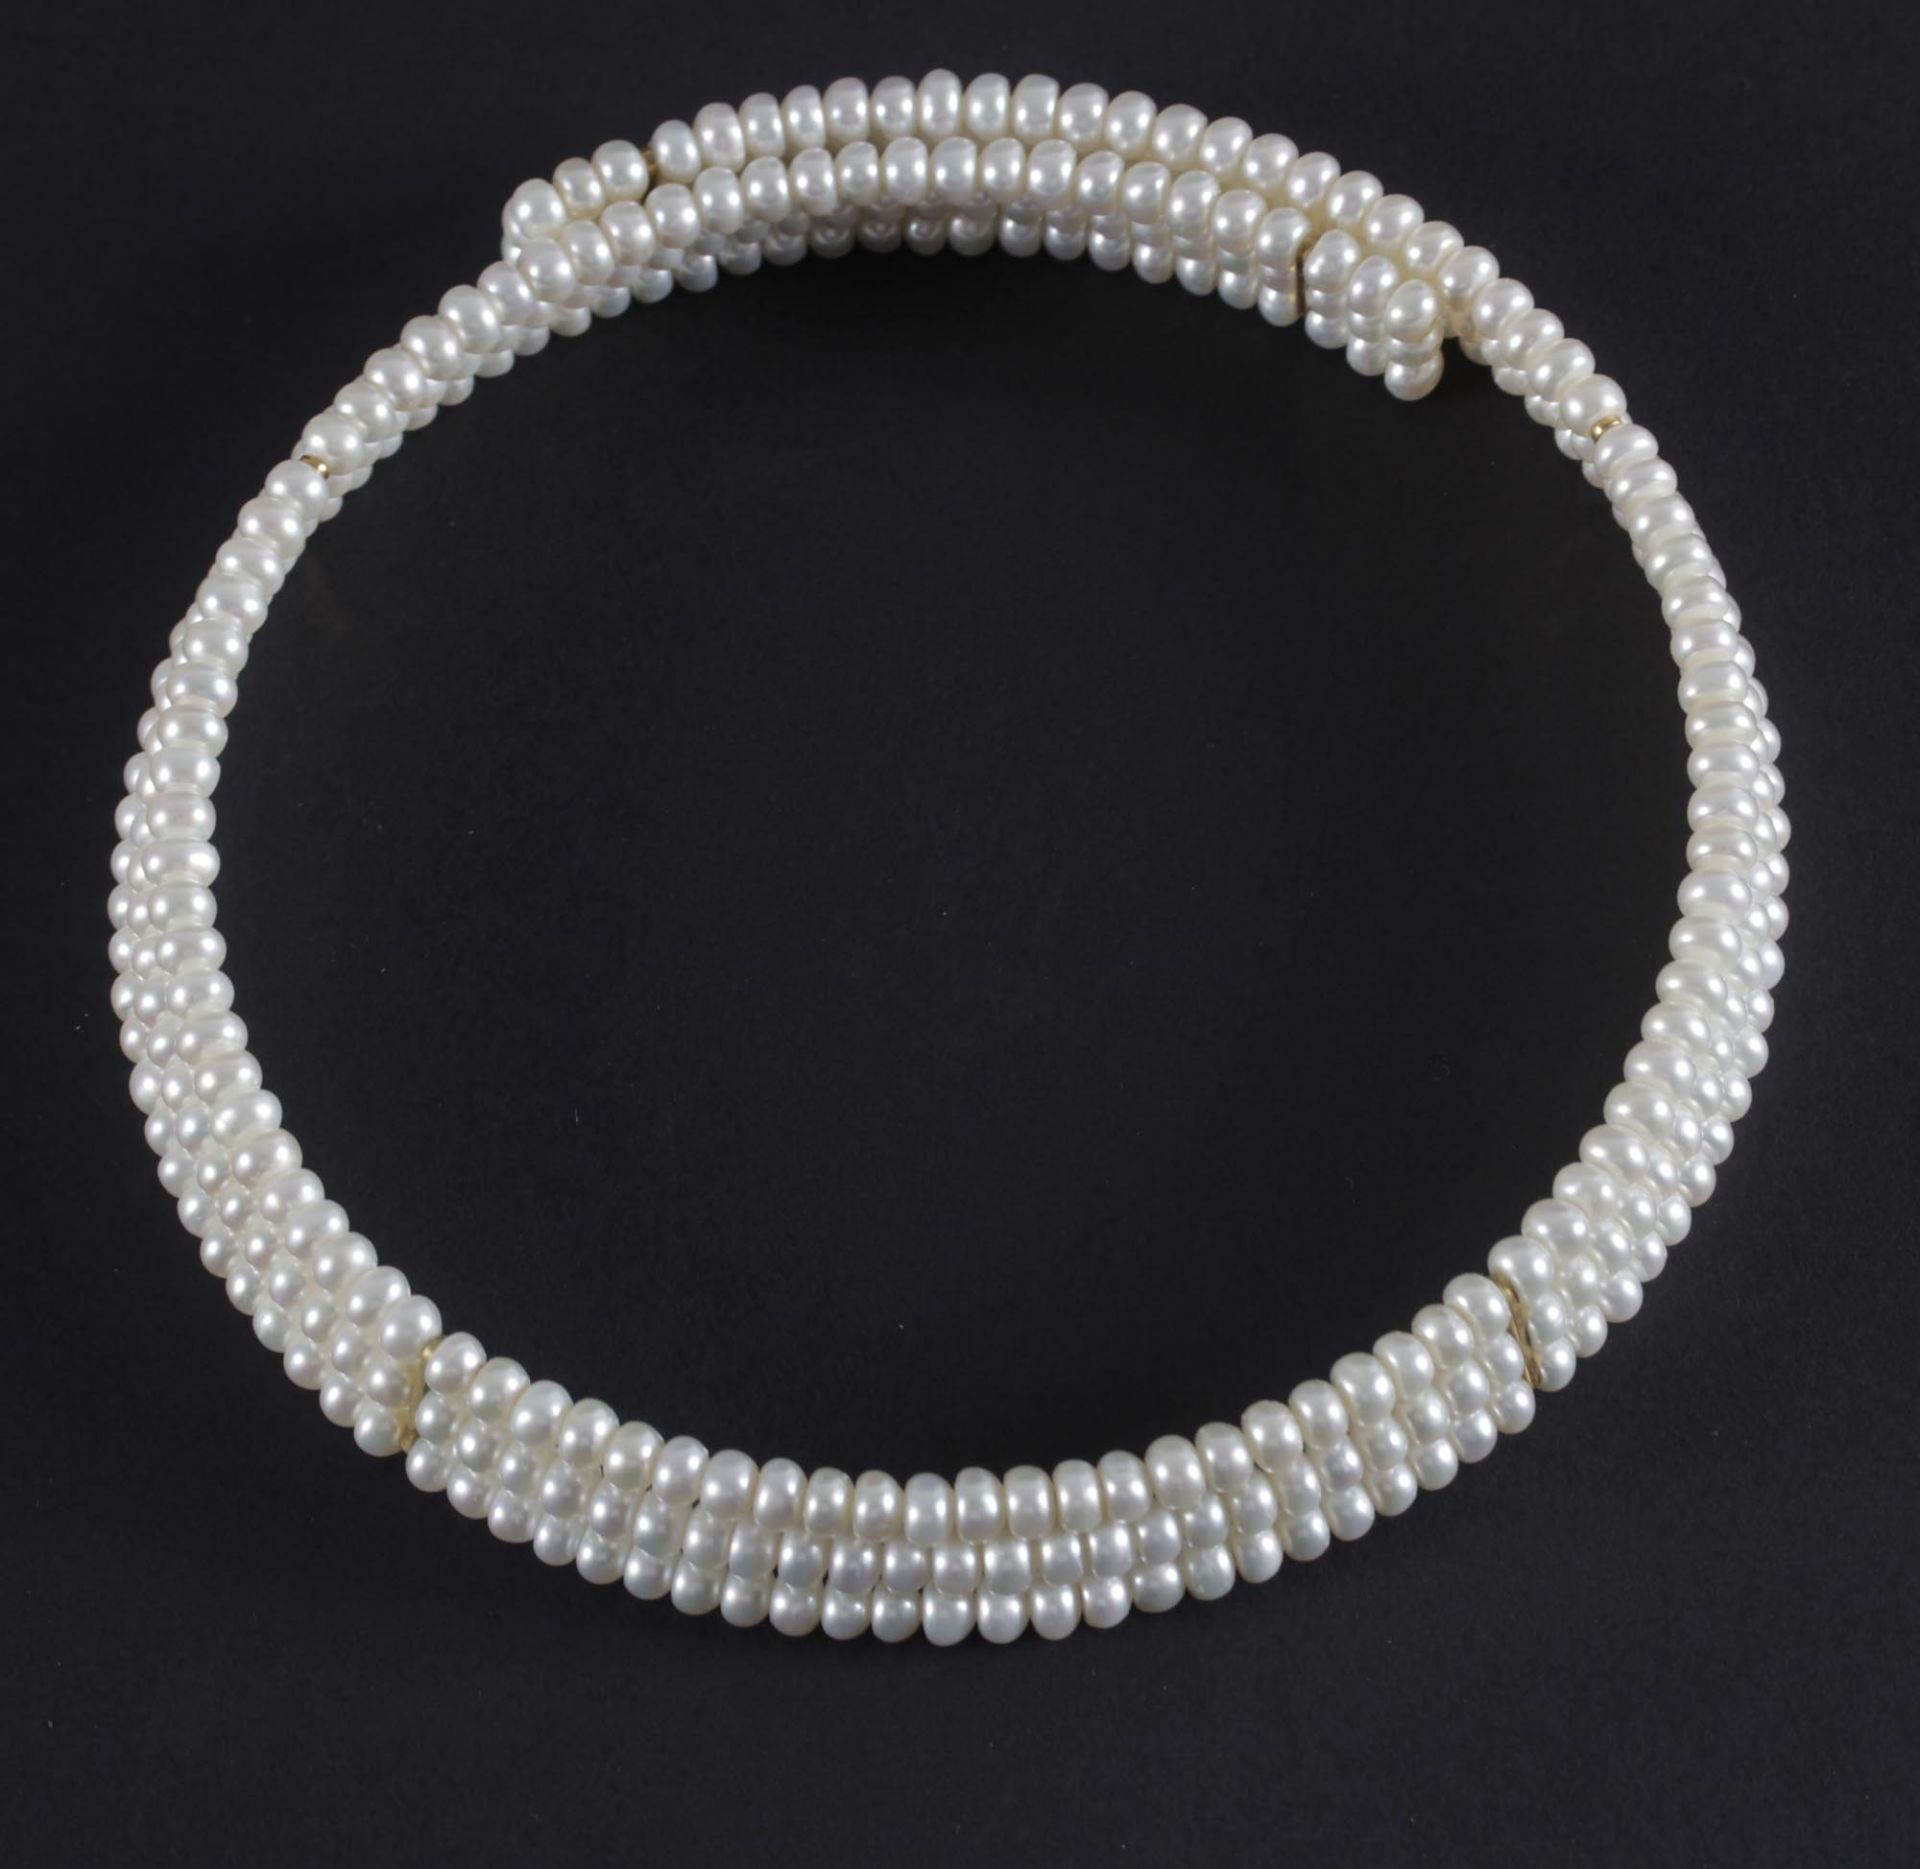 Perlen-Halsreif, elastisch3-reihiger Halsreif mit ovalen Perlen silbrig-weißer Tönung, D: ca. 4,